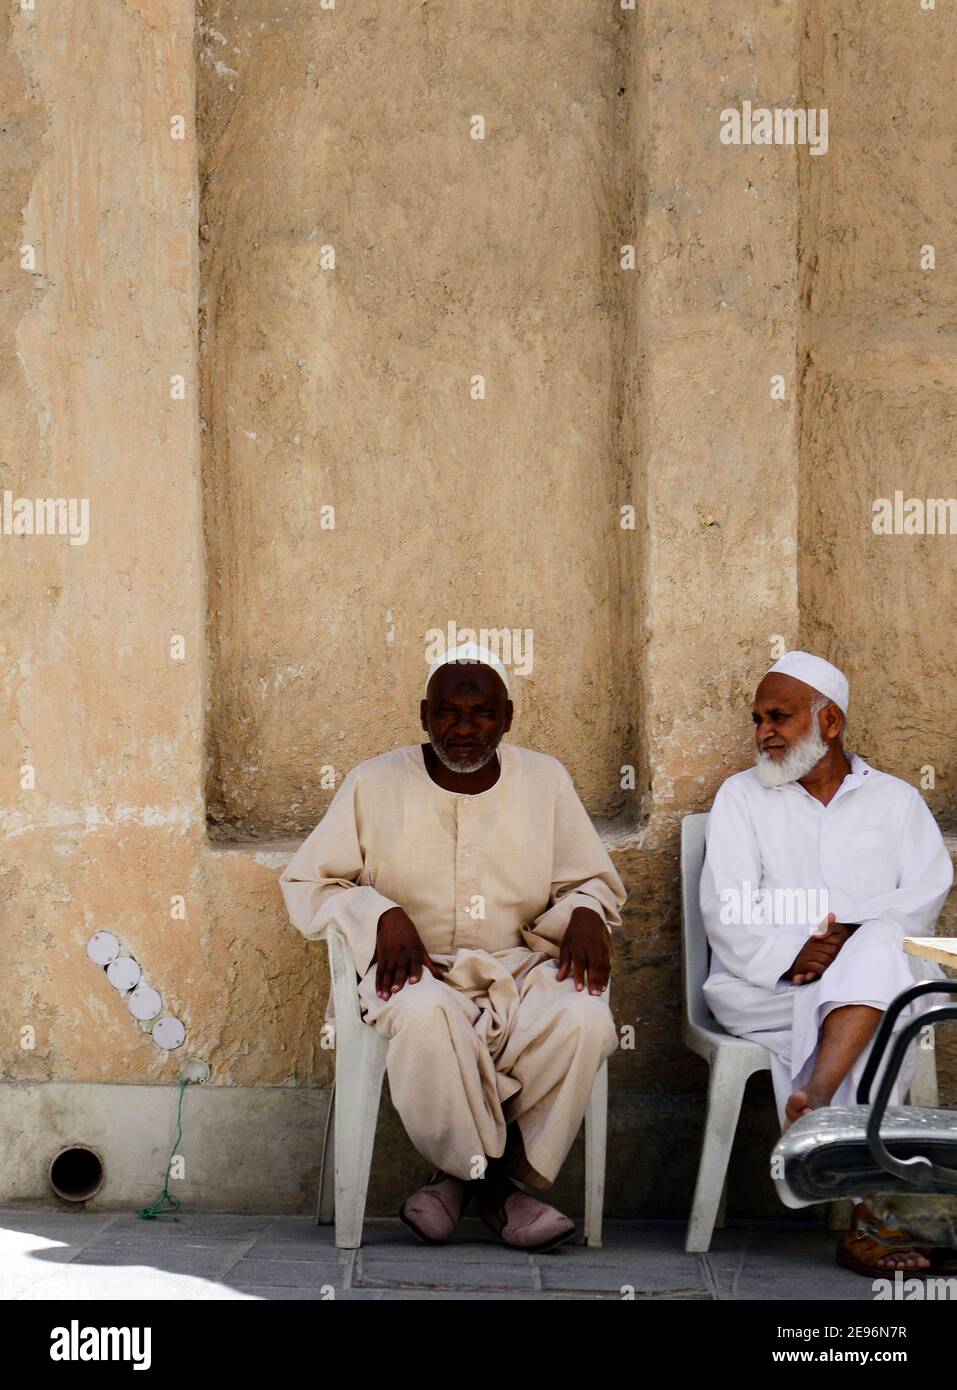 Qatari men sitting at the market. Stock Photo